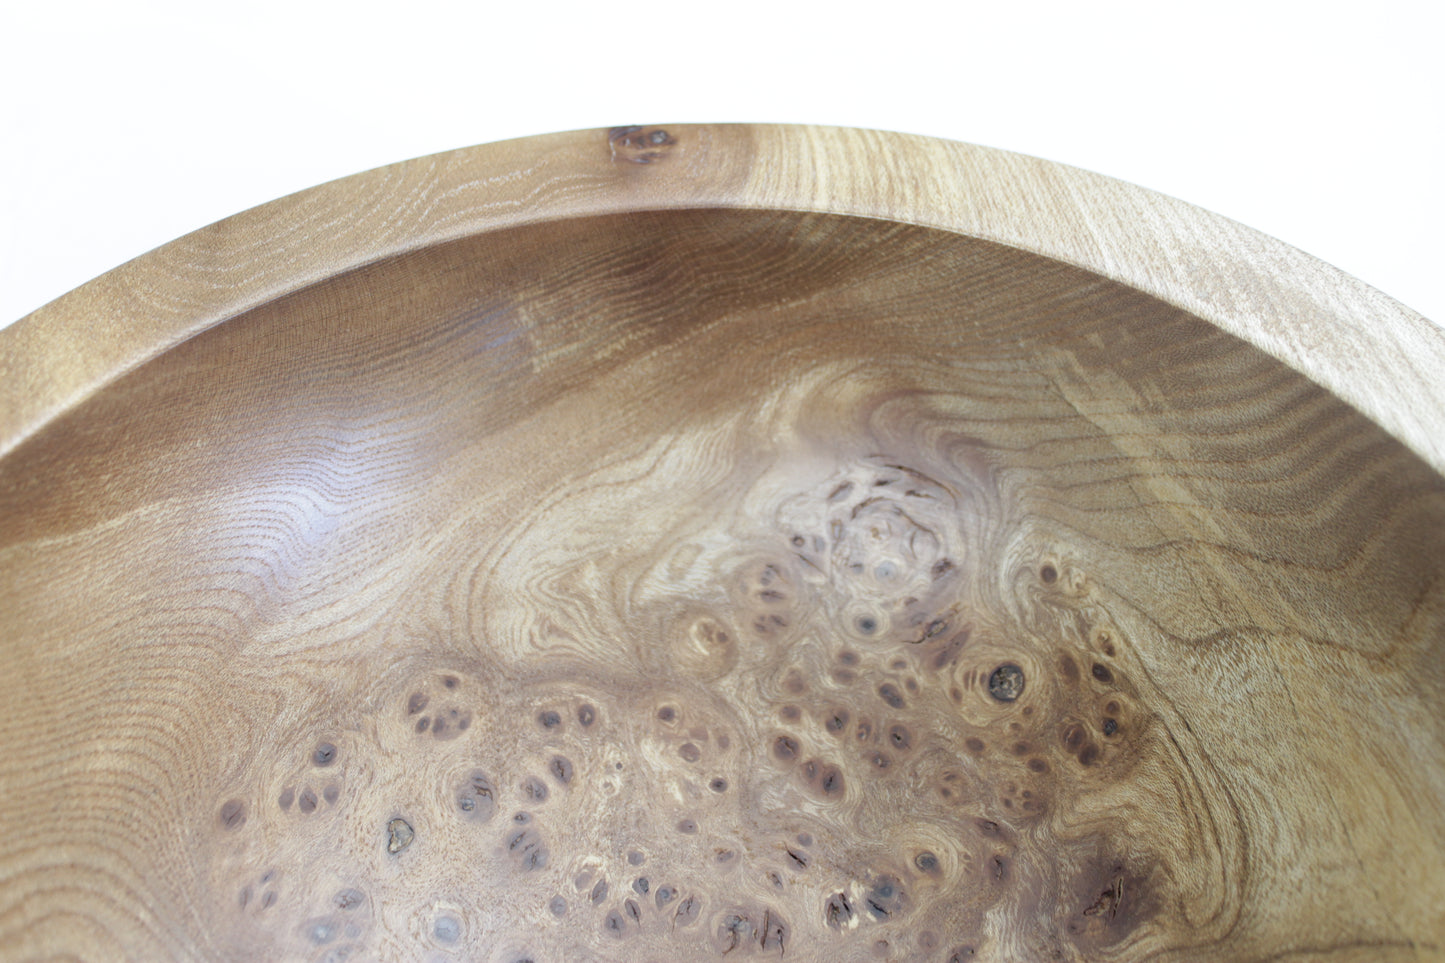 Irish Made Turned Wooden Bowl